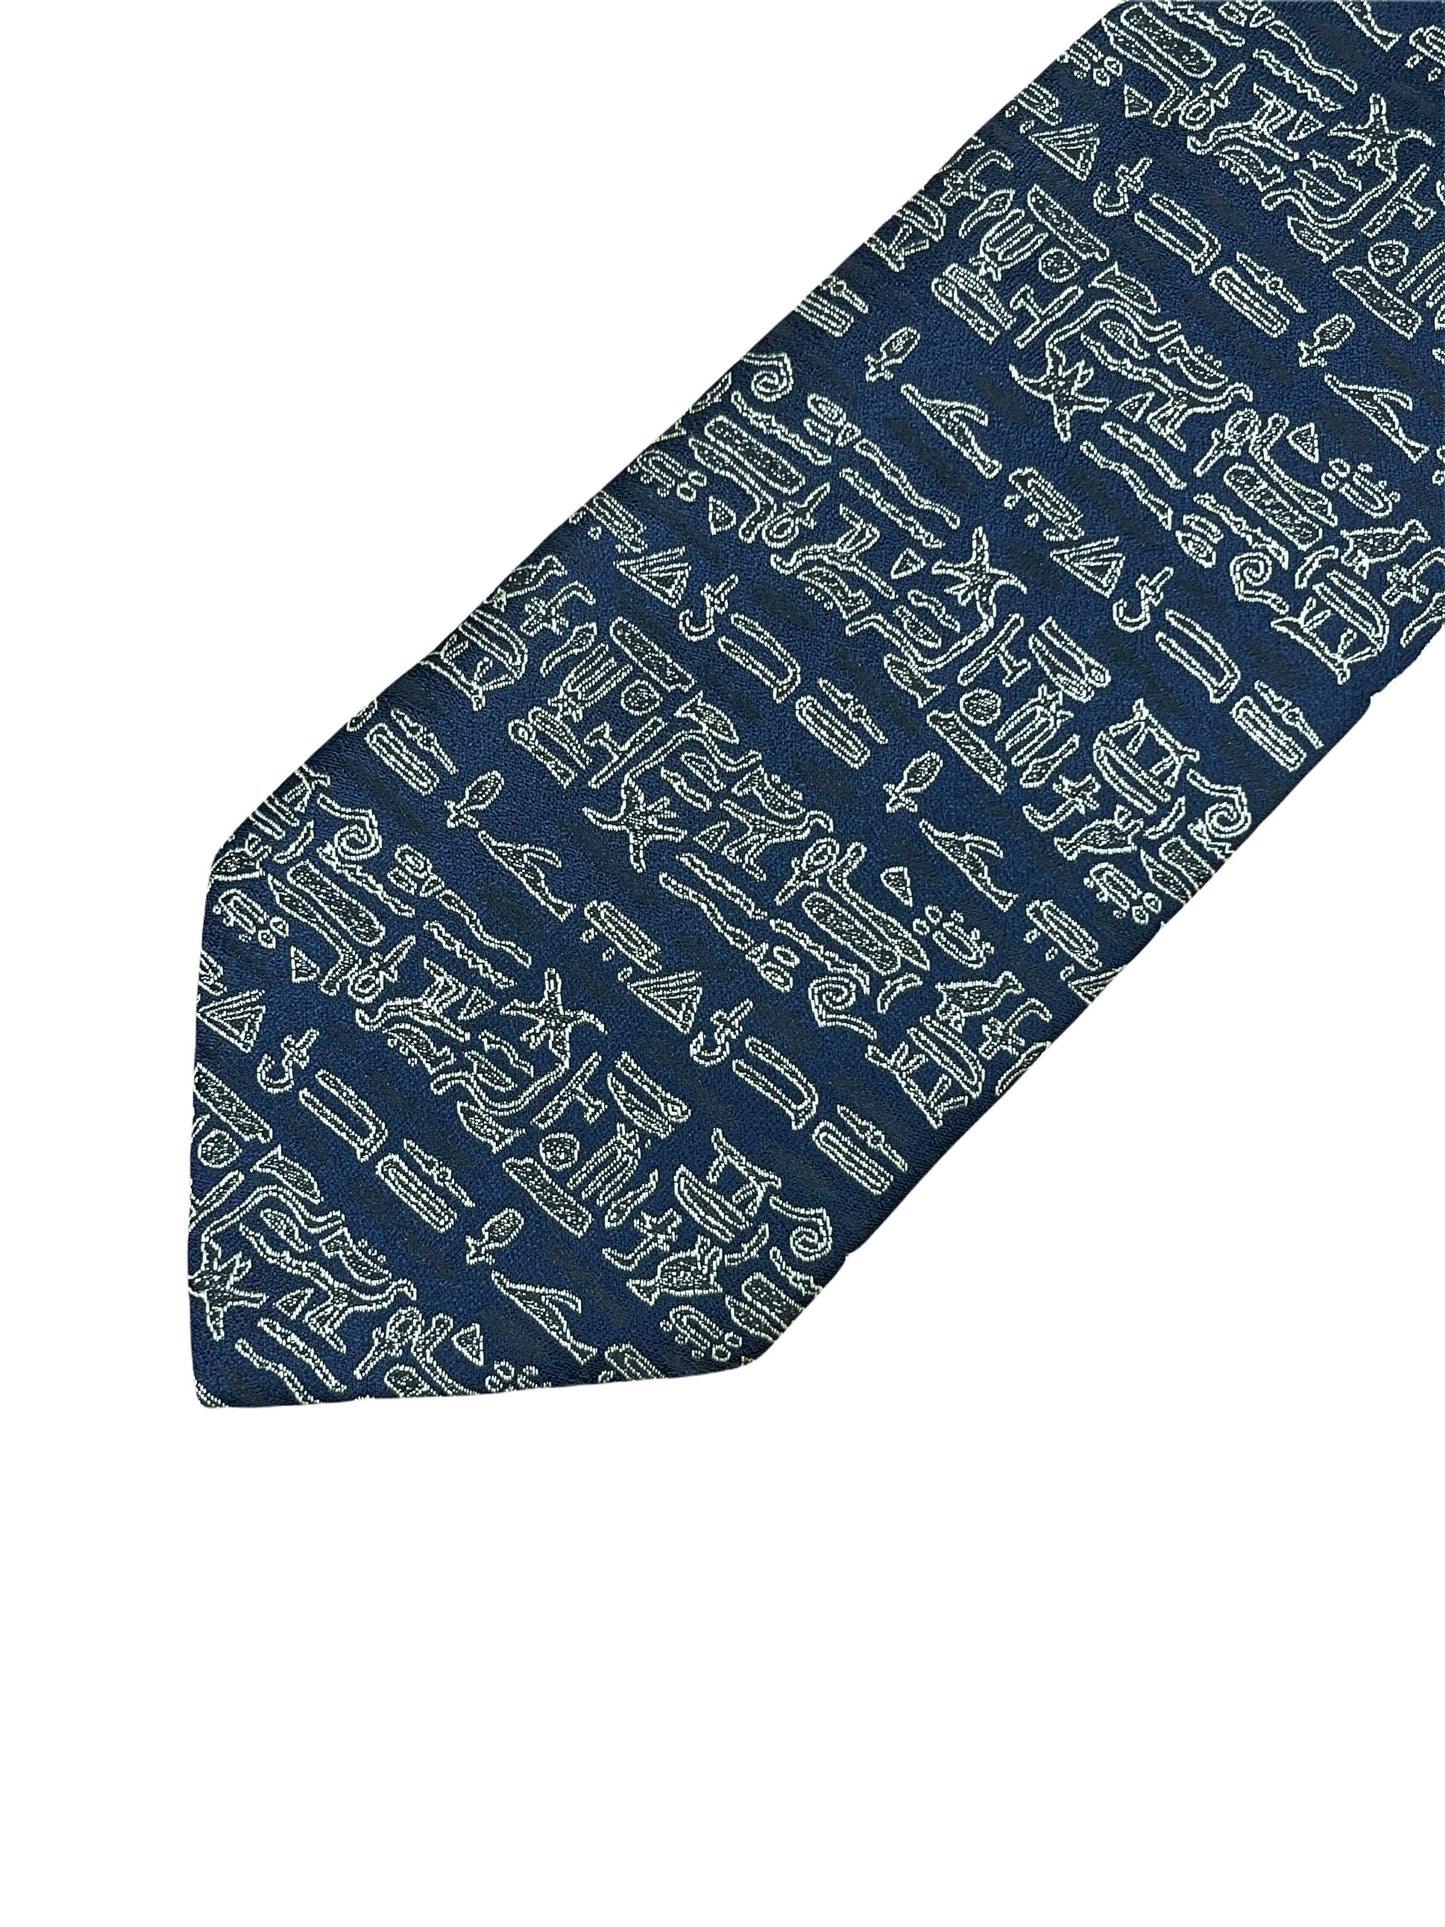 Giorgio Armani geo printed navy silk tieGiorgio Armani Navy Blue & Gold Silk Geometric Tie—Genuine Design luxury consignment 